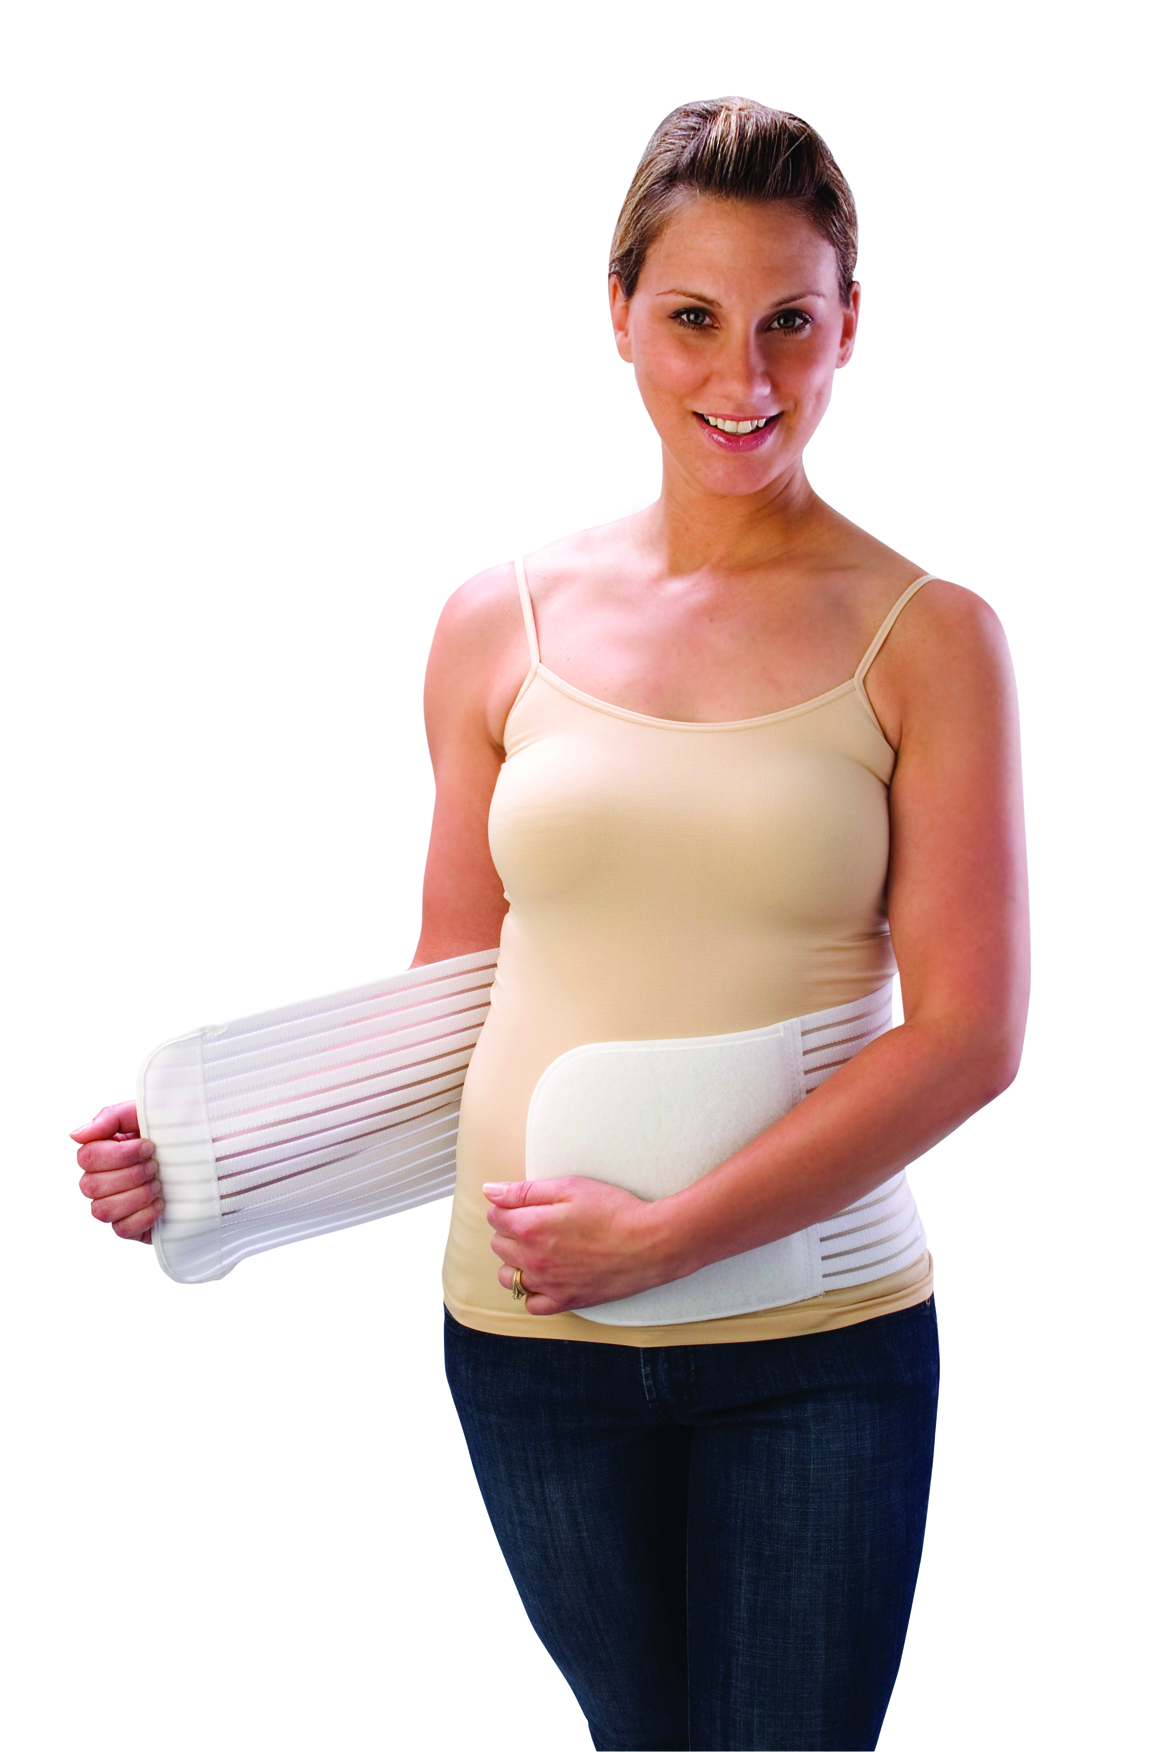 Loving Comfort Post Pregnancy Support Belt - Motherhood